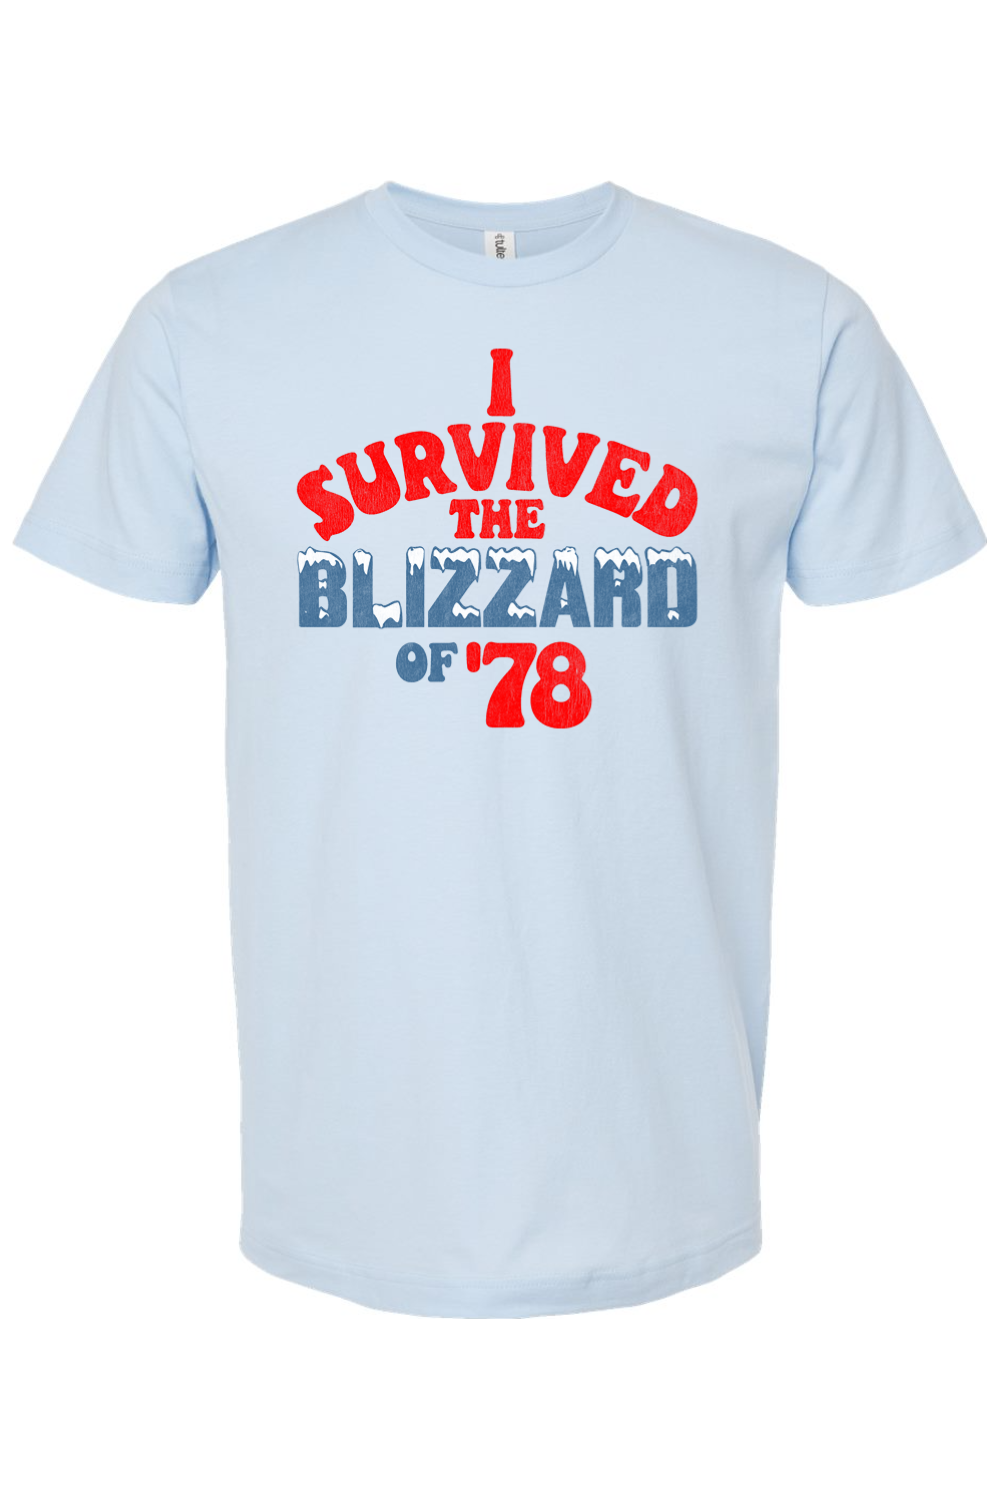 I Survived the Blizzard of '78 - Yinzylvania